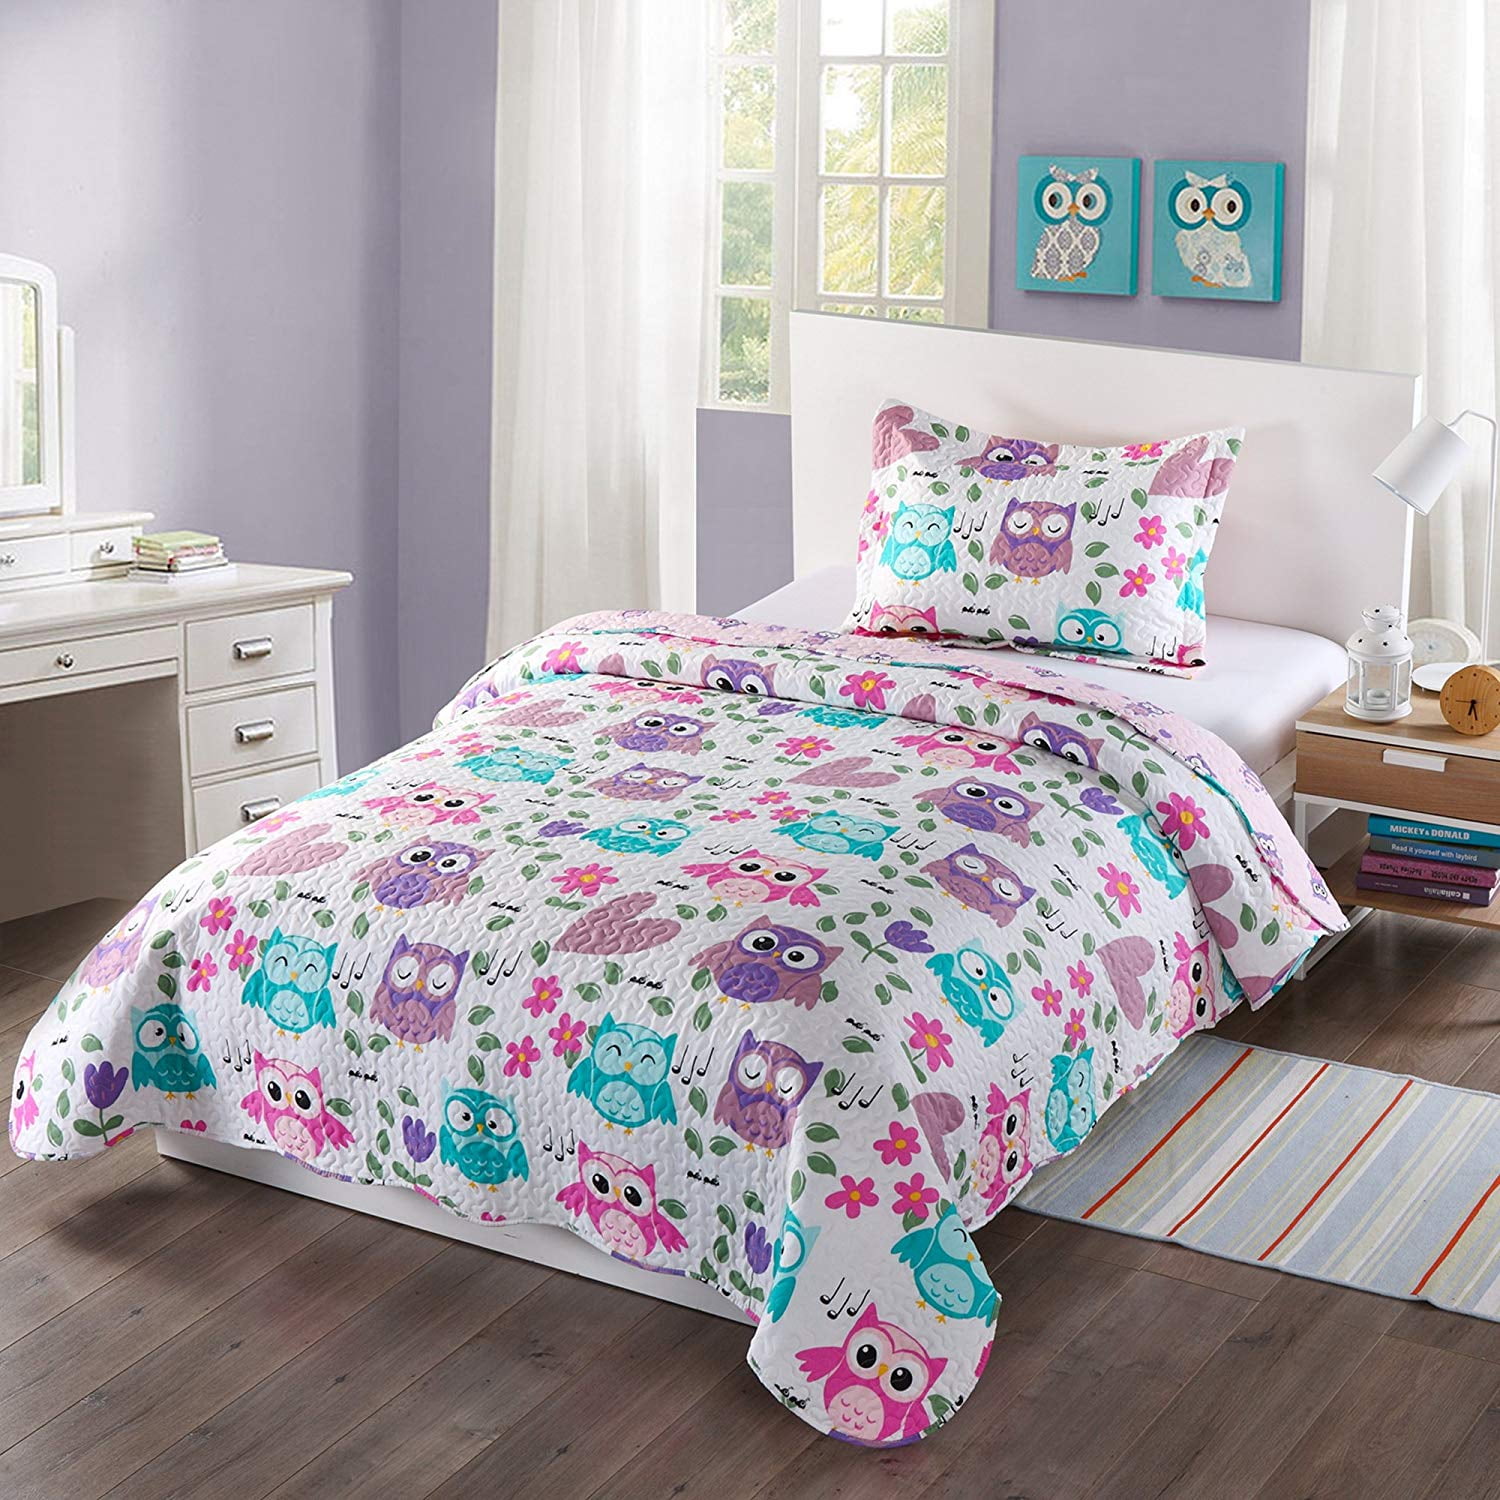 2pcs Kids Quilt Bedspread Comforter Set Throw Blanket for Boys Girls Elephant 